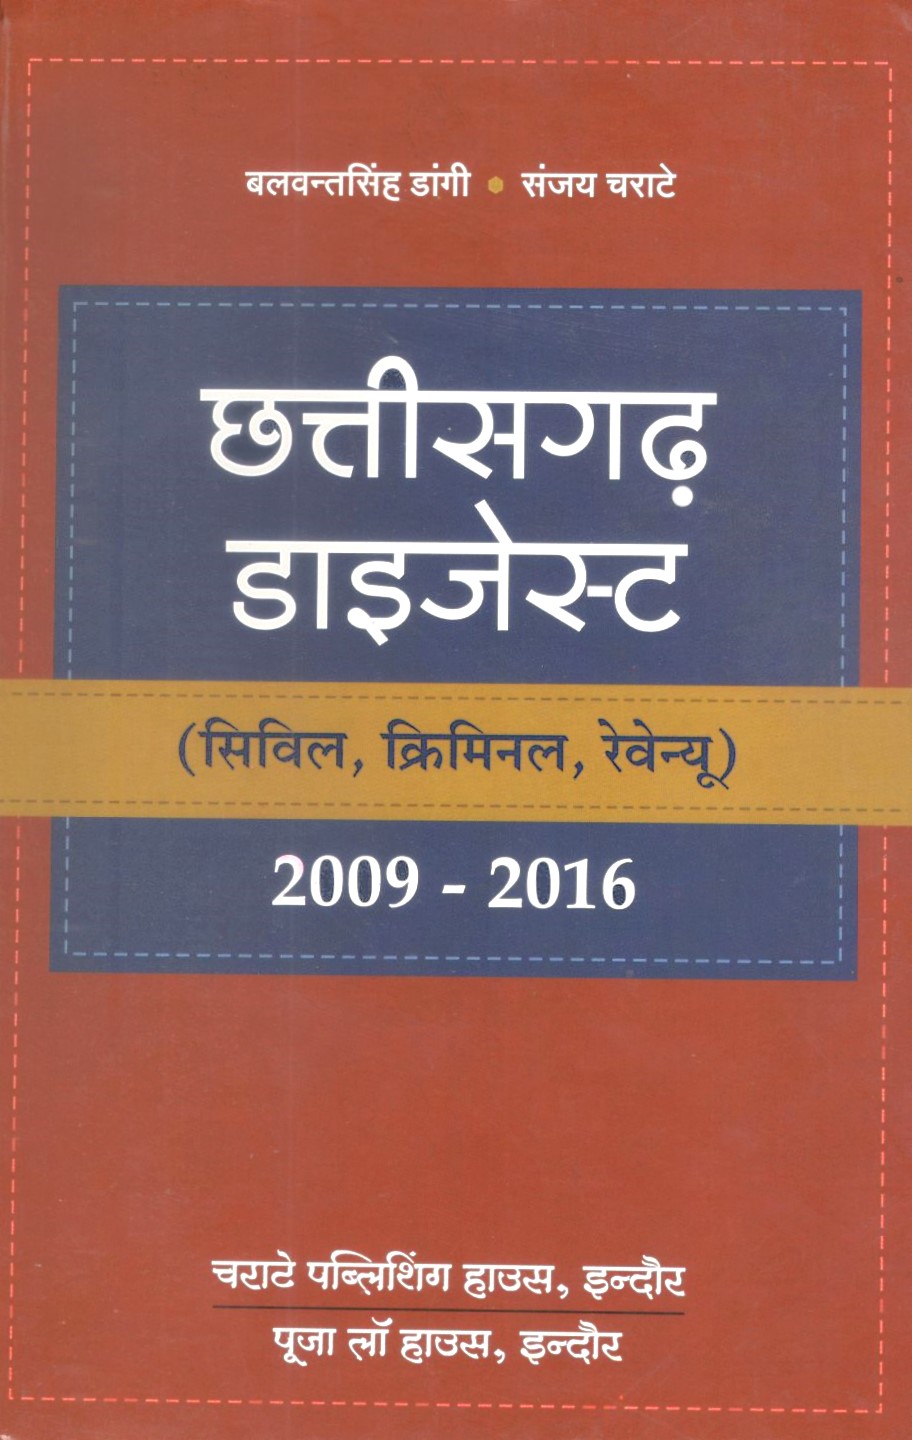 बलवंत सिंह डांगी, संजय चराटे - छत्तीसगढ़ डाइजेस्ट (सिविल, क्रिमिनल, रेवेन्यू) 2009-2016 / Chhattisgarh Digest (Civil, Criminal, Revenue) 2009-2016